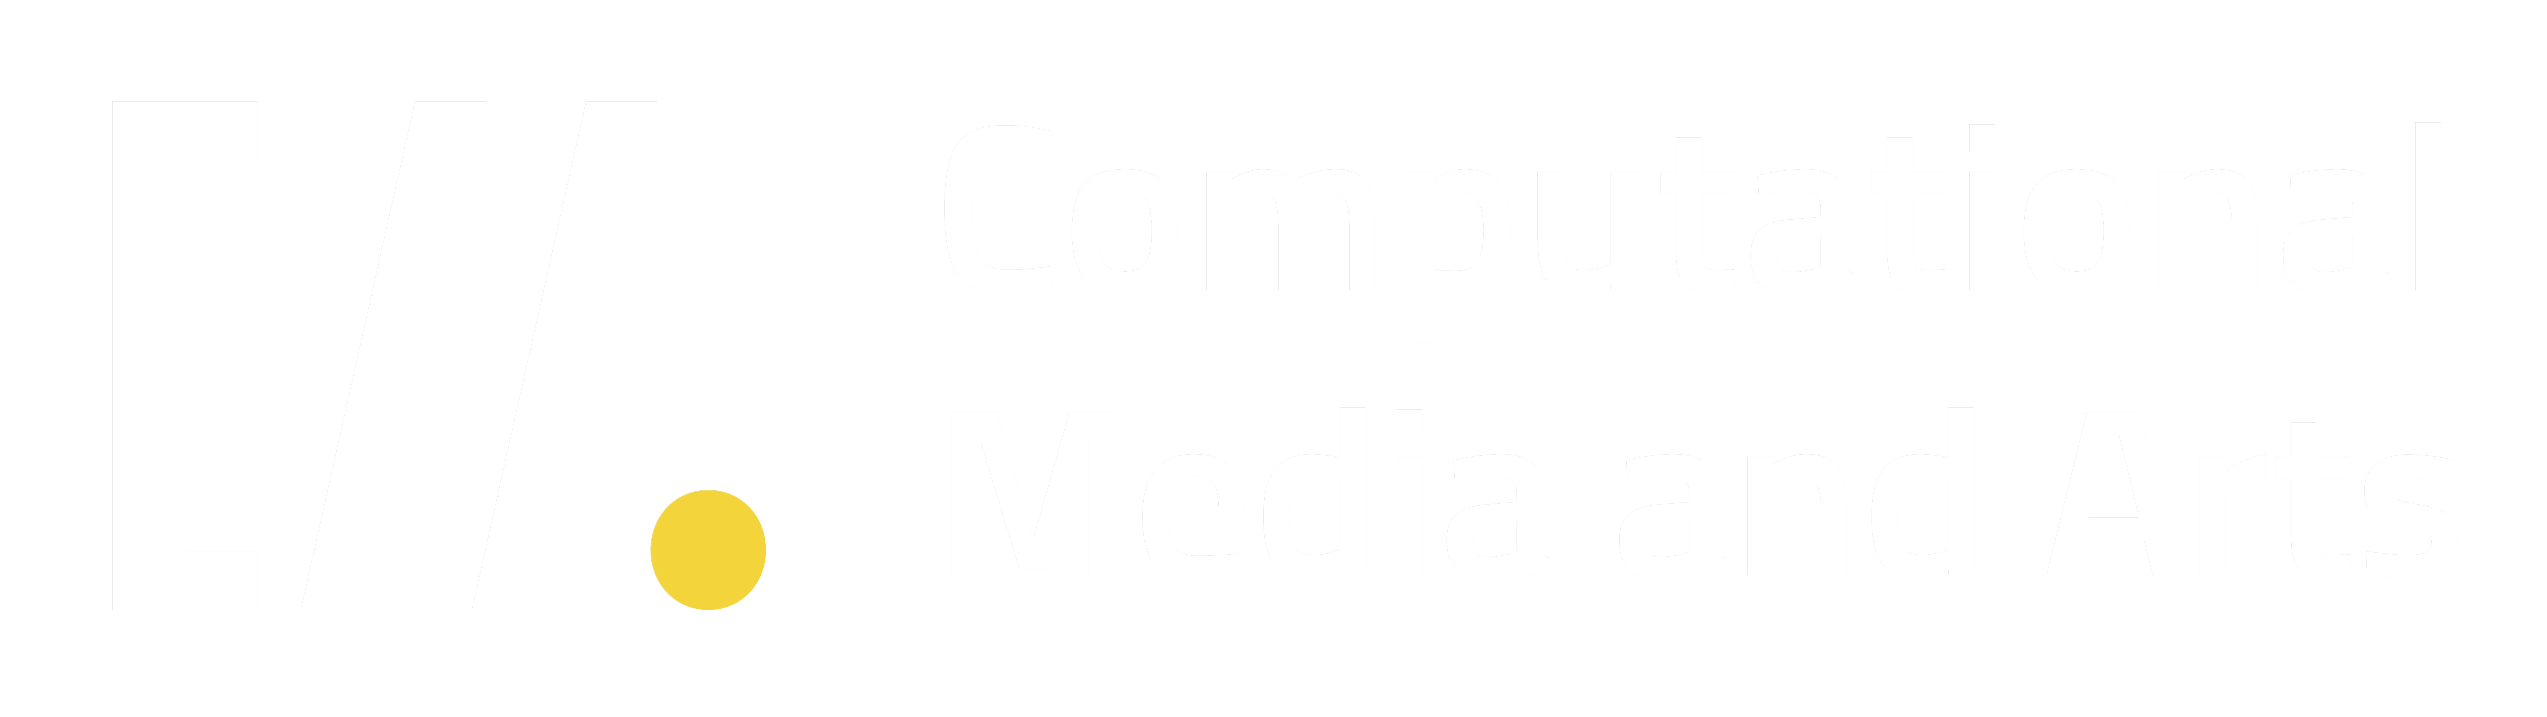 Computational Media and Arts (CMA), HKUST (GZ)